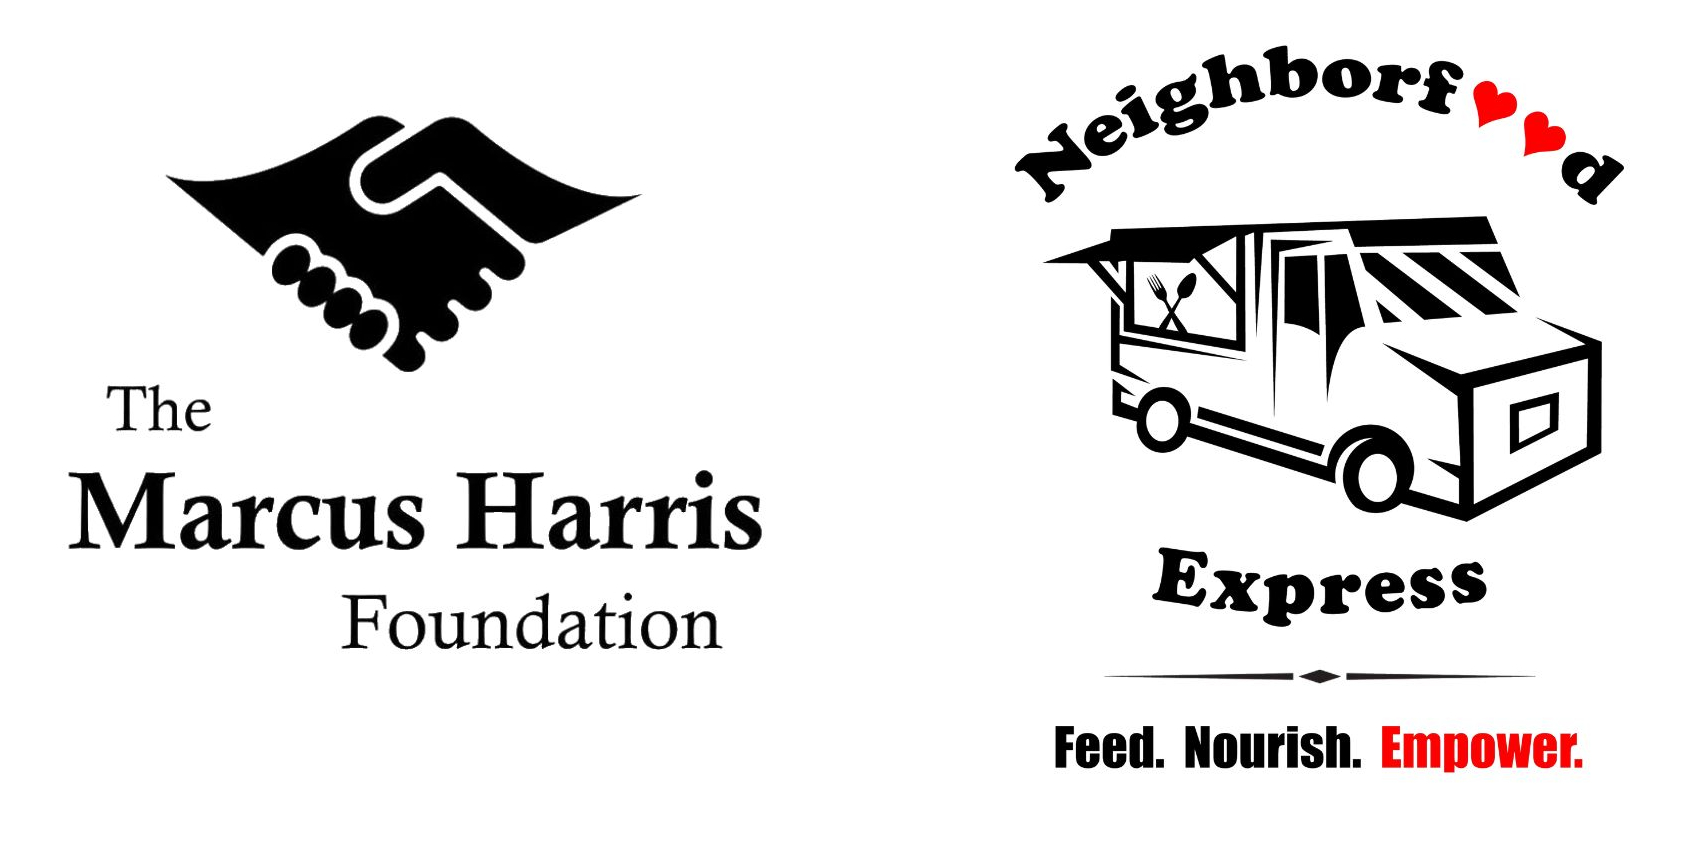 The Marcus Harris Foundation logo